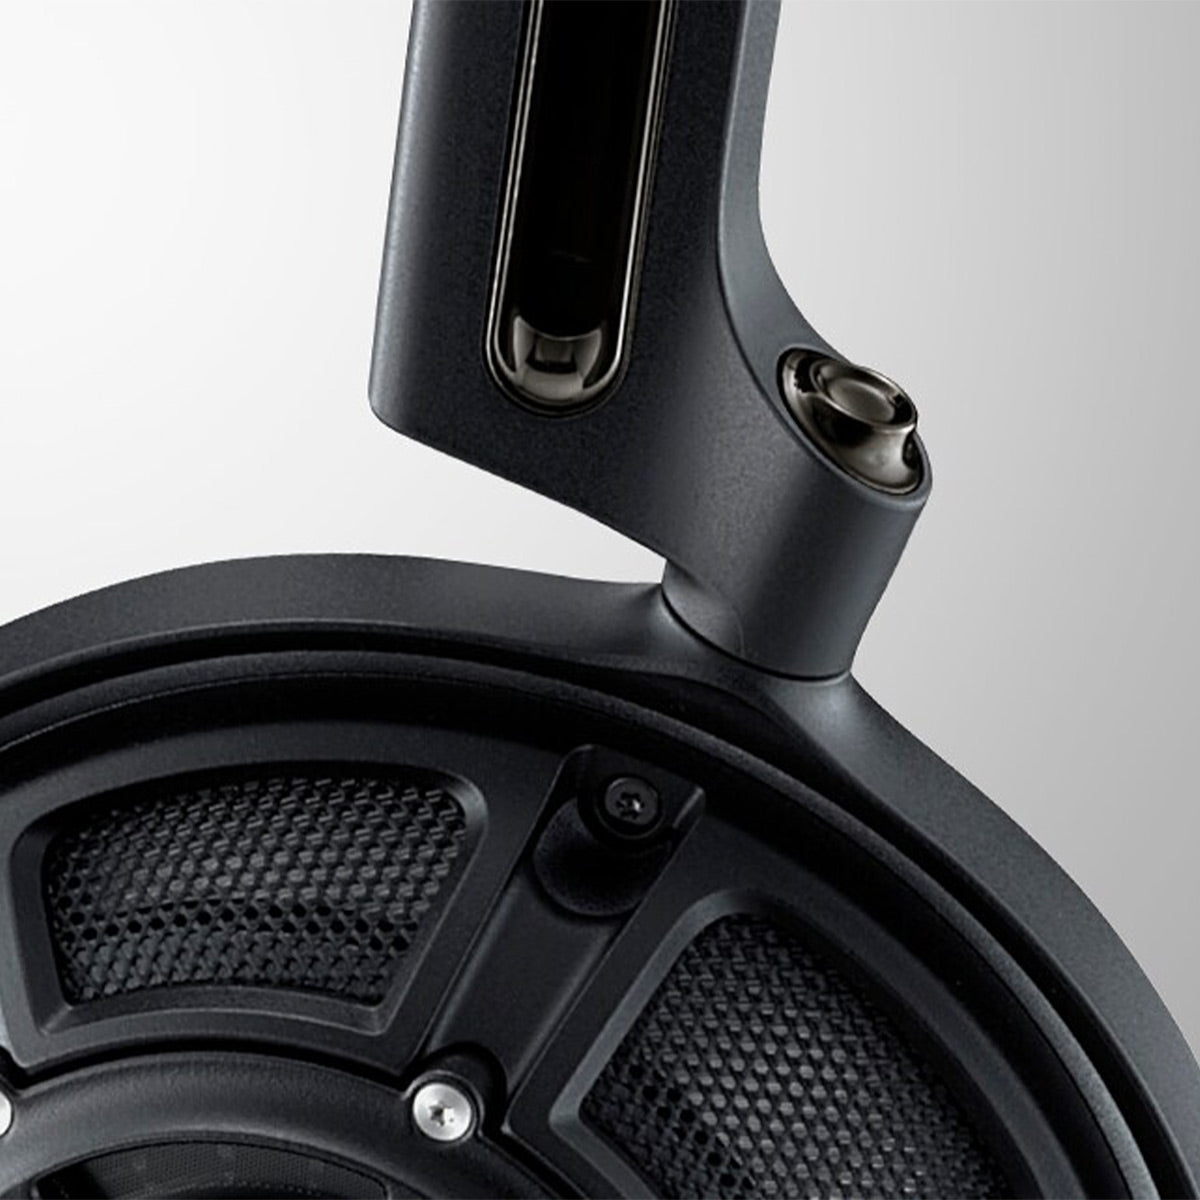 Yamaha YH-5000SE Over-Ear Headphones with Aluminum Headphone Stand